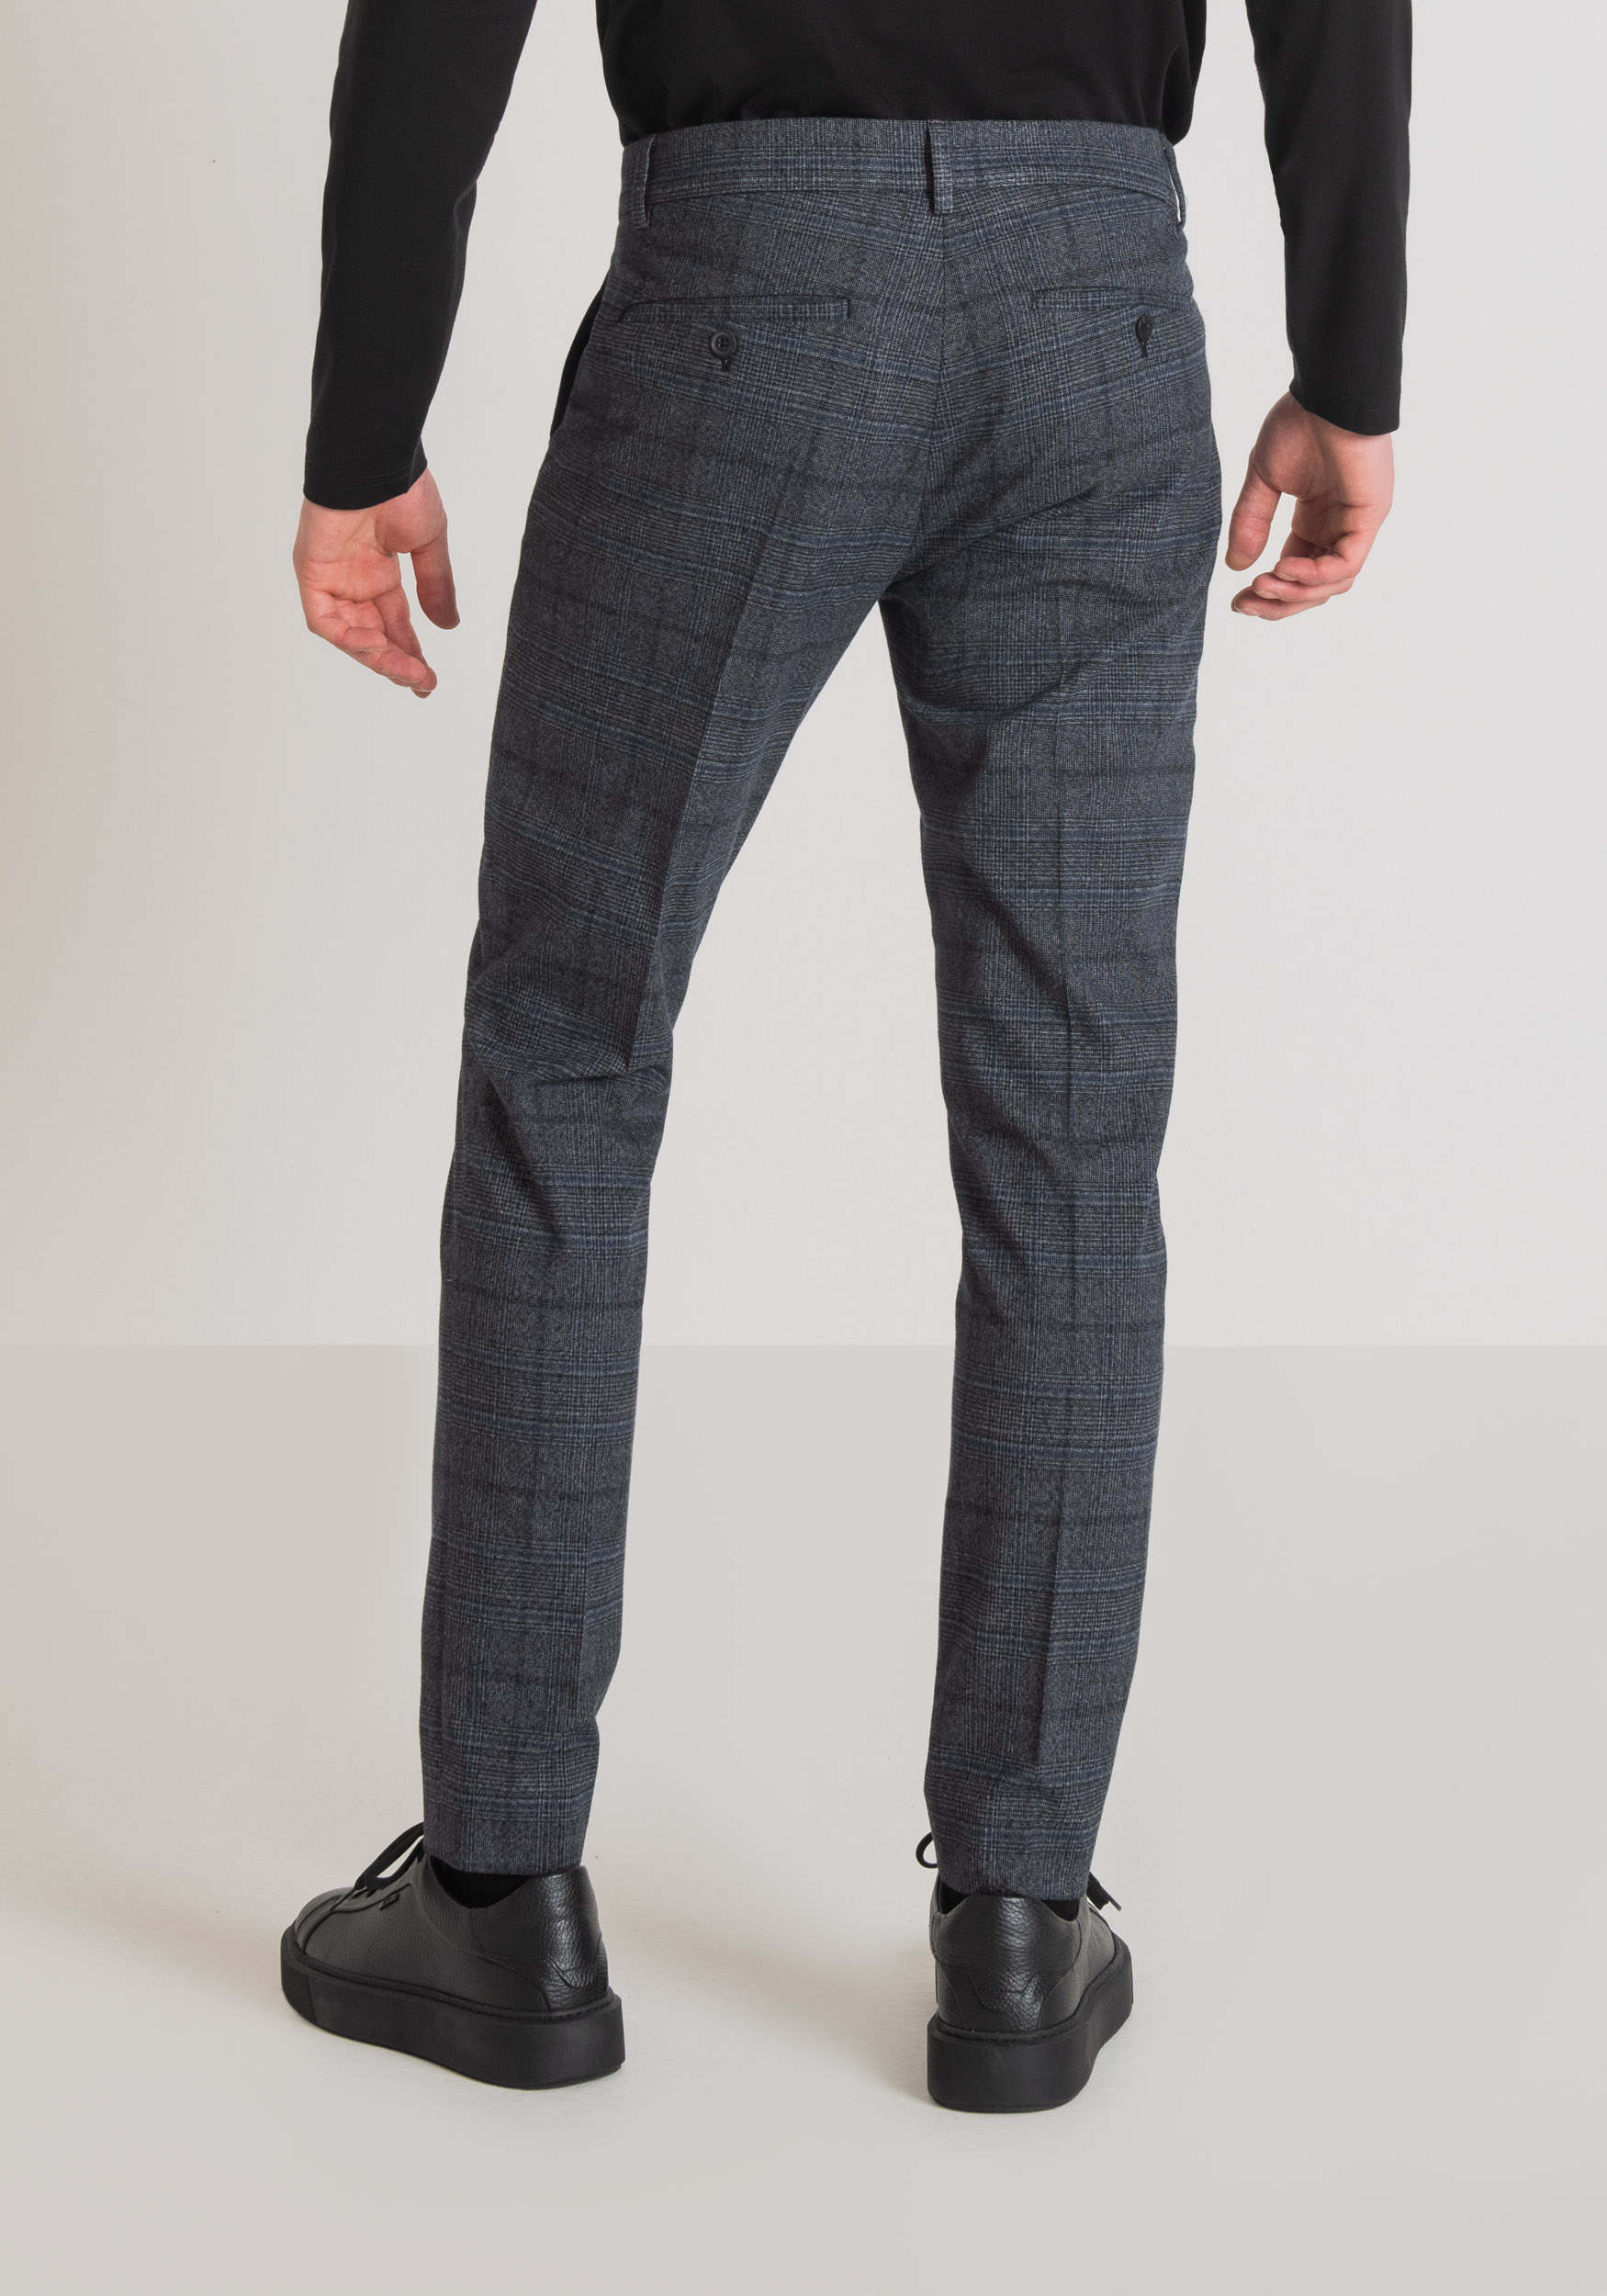 Antony Morato Pantalon Skinny Fit Bryan En Coton Armure Elastique Encre Bleu | Homme Pantalons